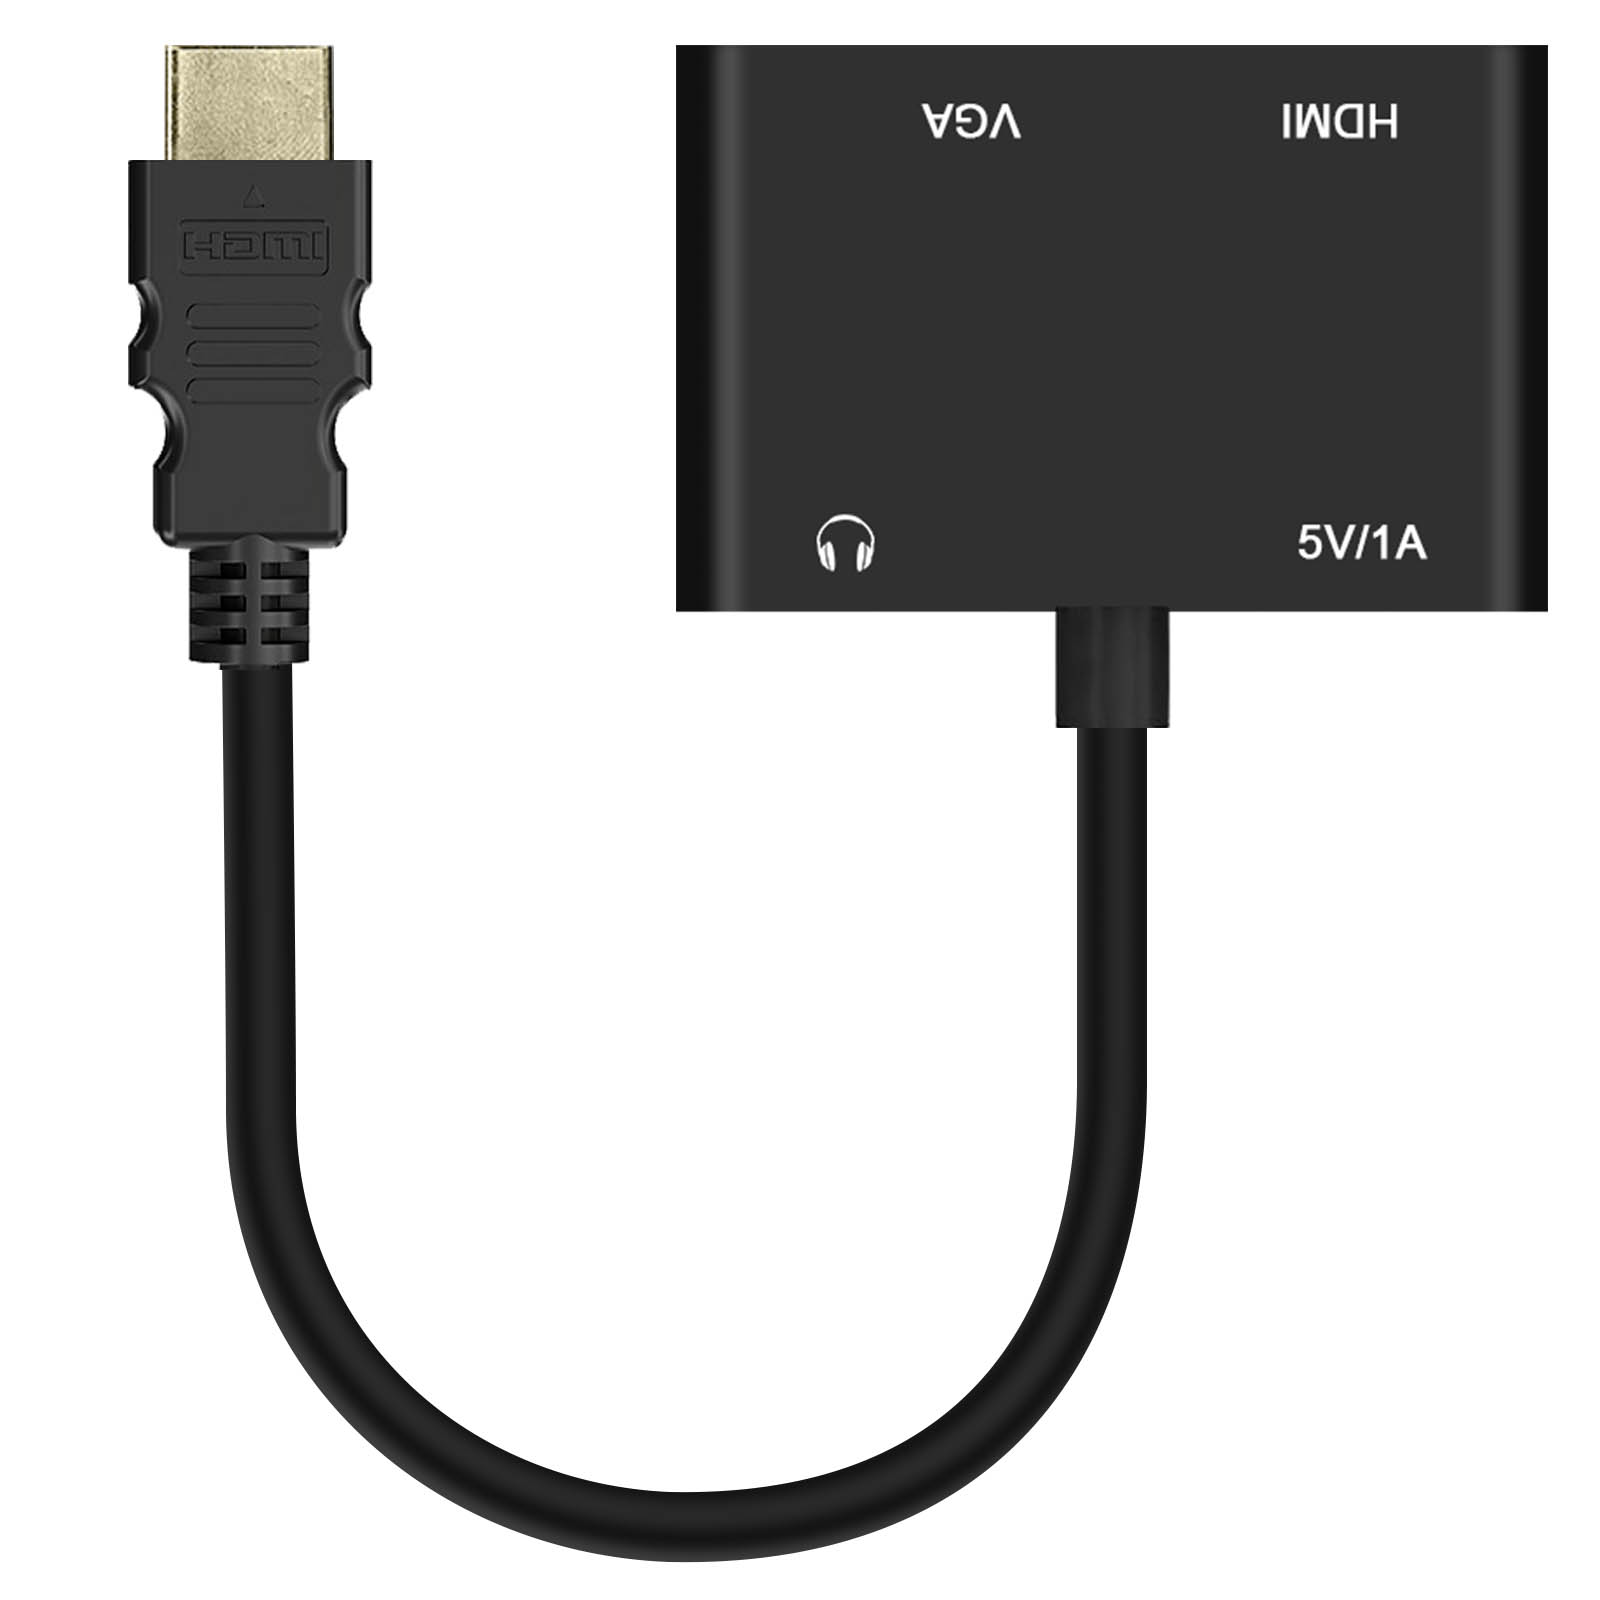 + 3.5mm HDMI VGA Videoadapter / Anschluss mit AVIZAR Schwarz Universal, HDMI